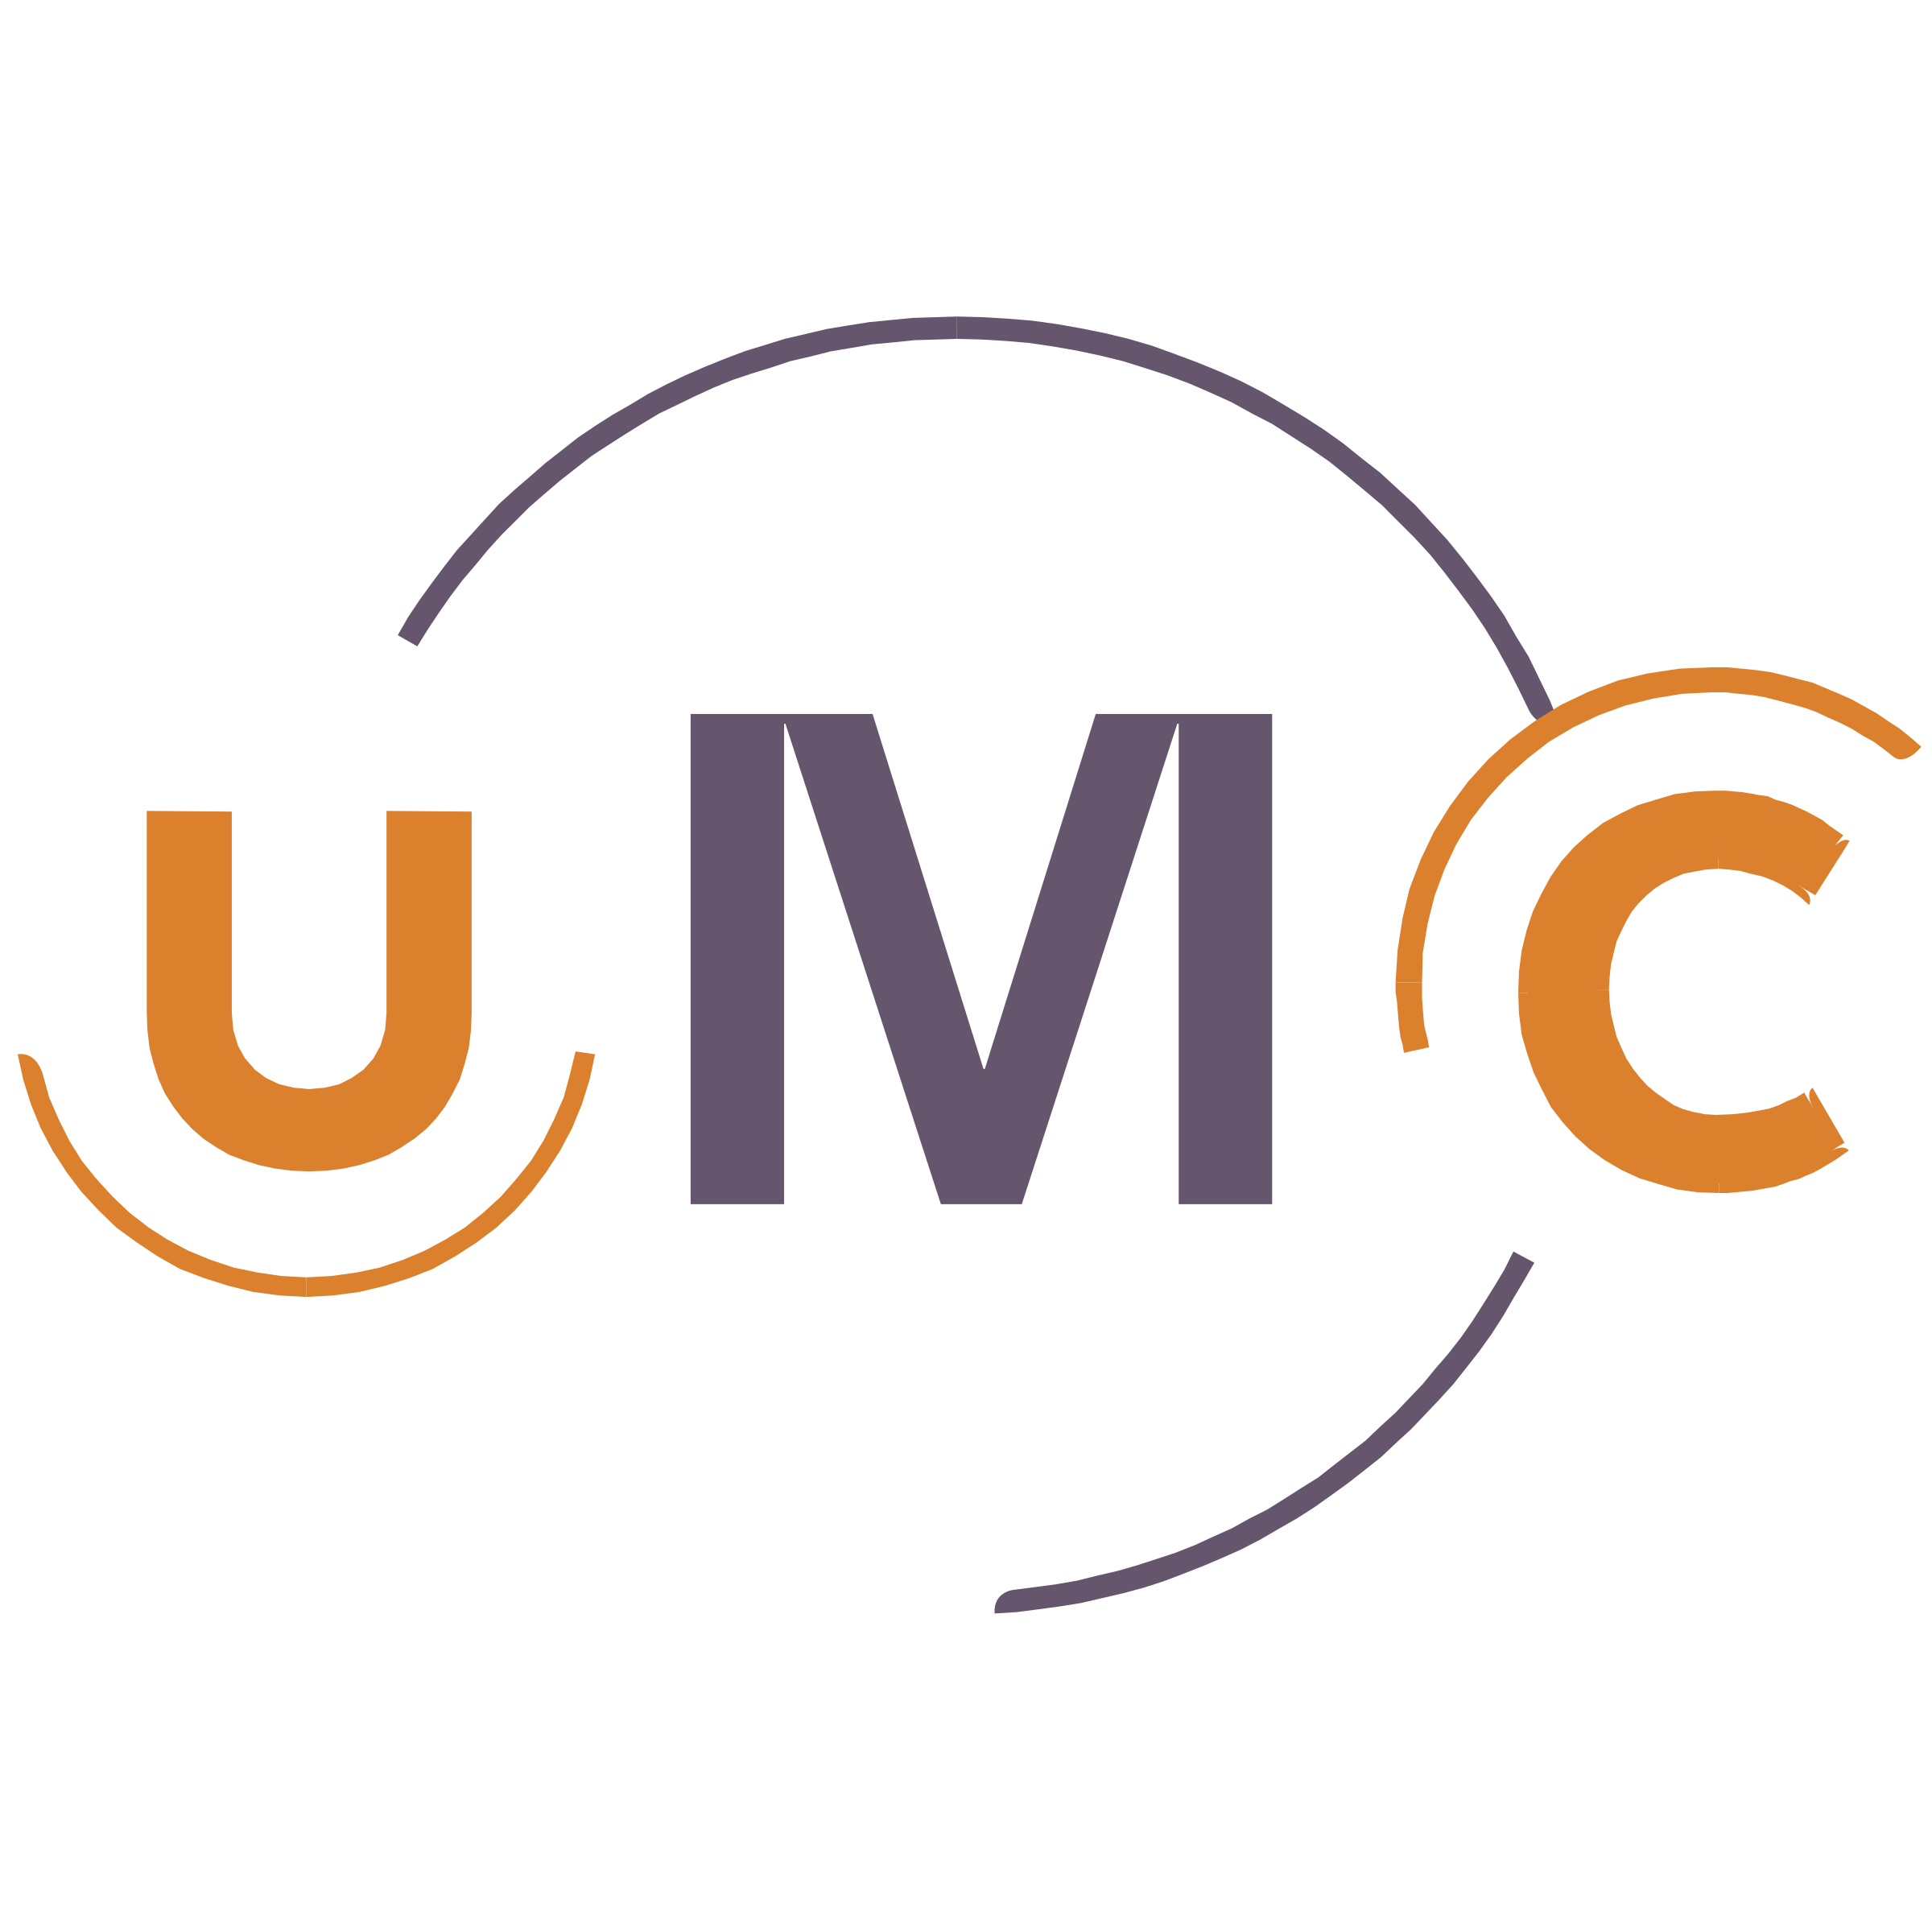 UMC Logo - UMC Logo PNG Transparent & SVG Vector